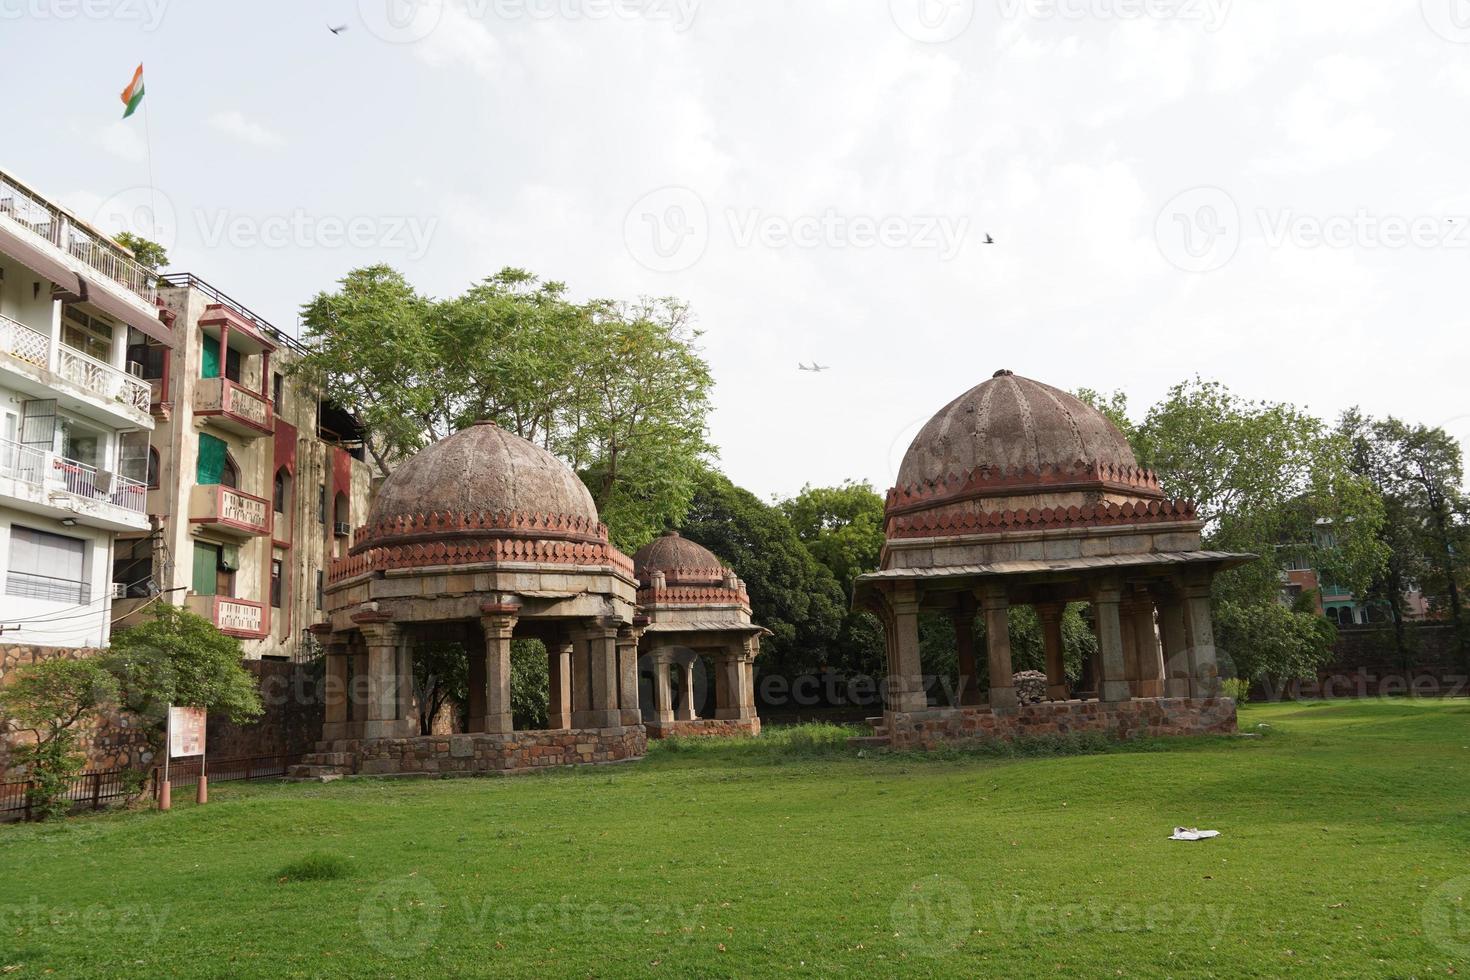 tughluq-gravar indiska subkontinenten monotona och tunga strukturer i indoislamisk arkitektur byggda under tughlaq-dynastin foto